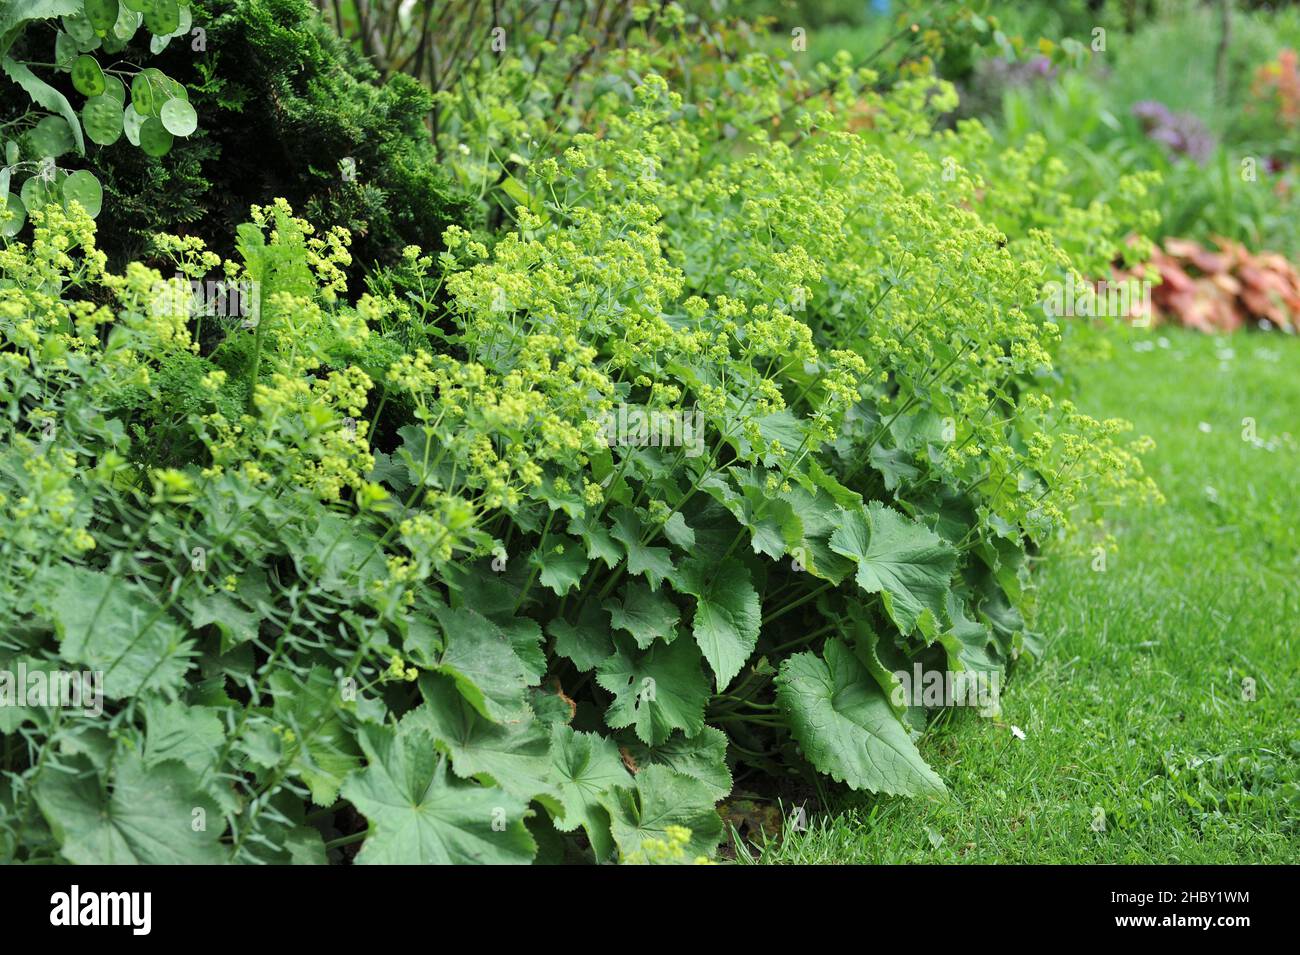 Lady's mantle (Alchemilla mollis) blooms in a garden in June Stock Photo